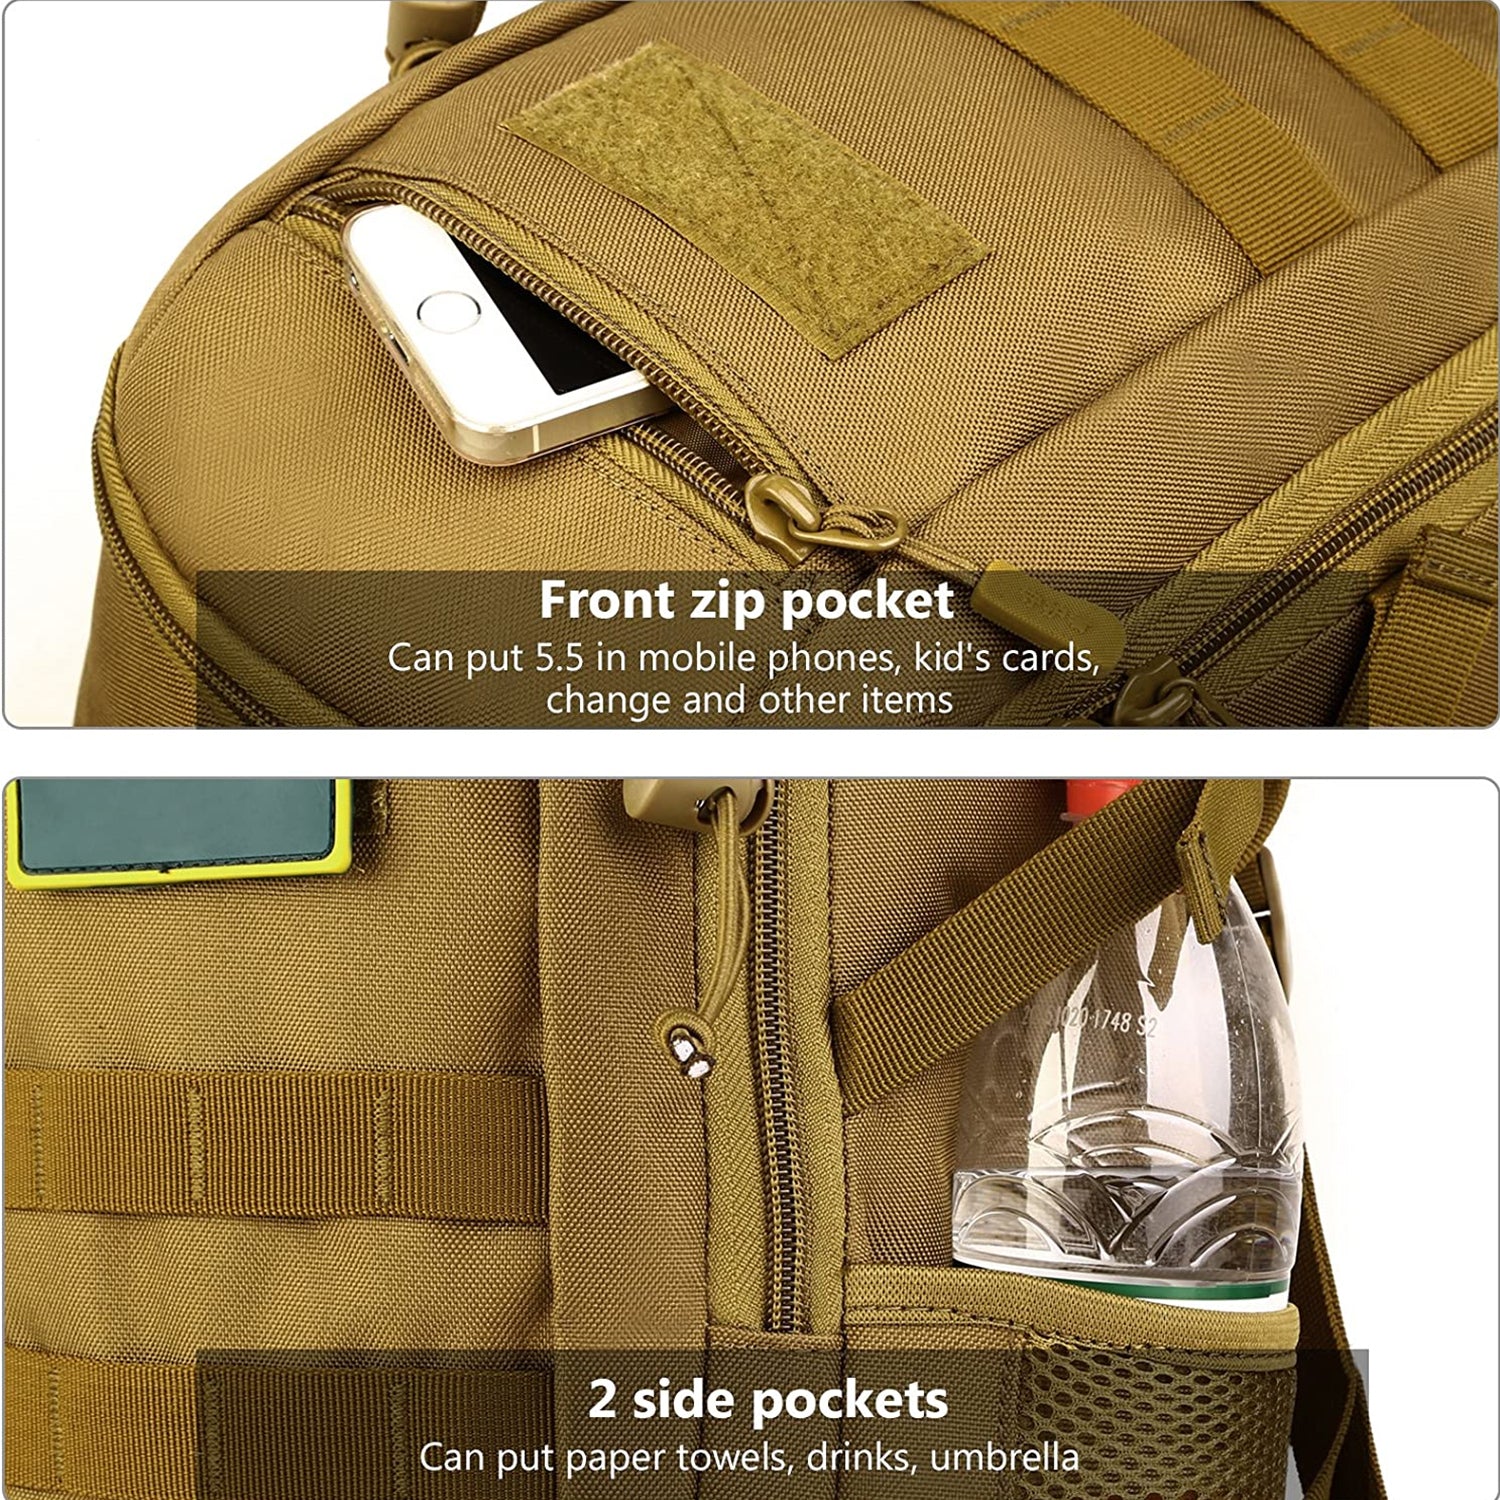 HARDLAND Small Tactical Backpack Mini 12L Daypack